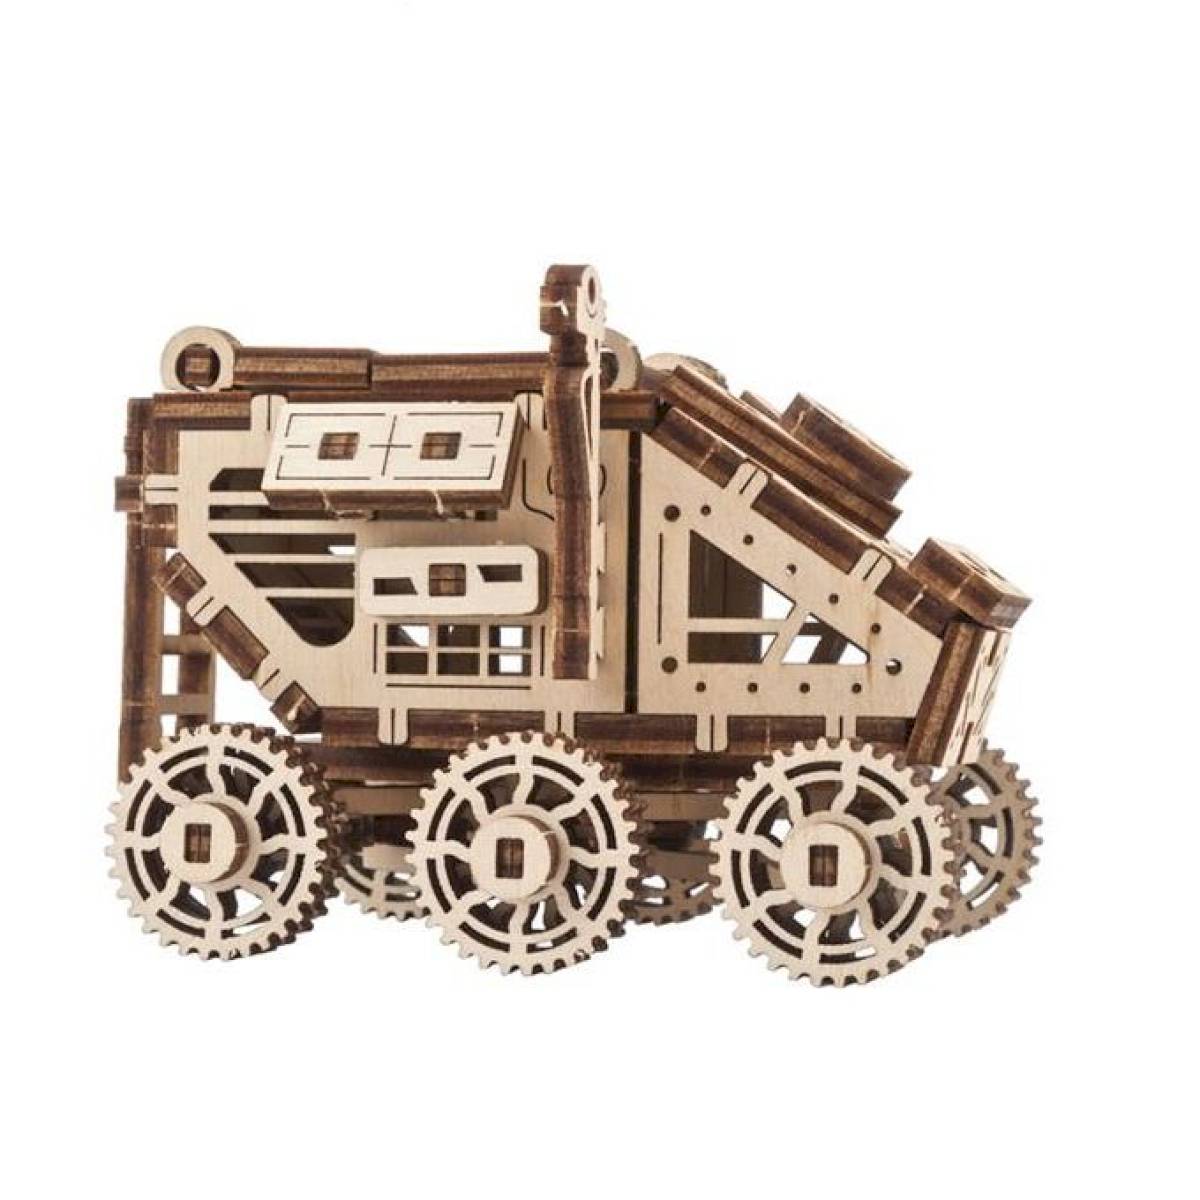 Maquette 3D - Mars Rover